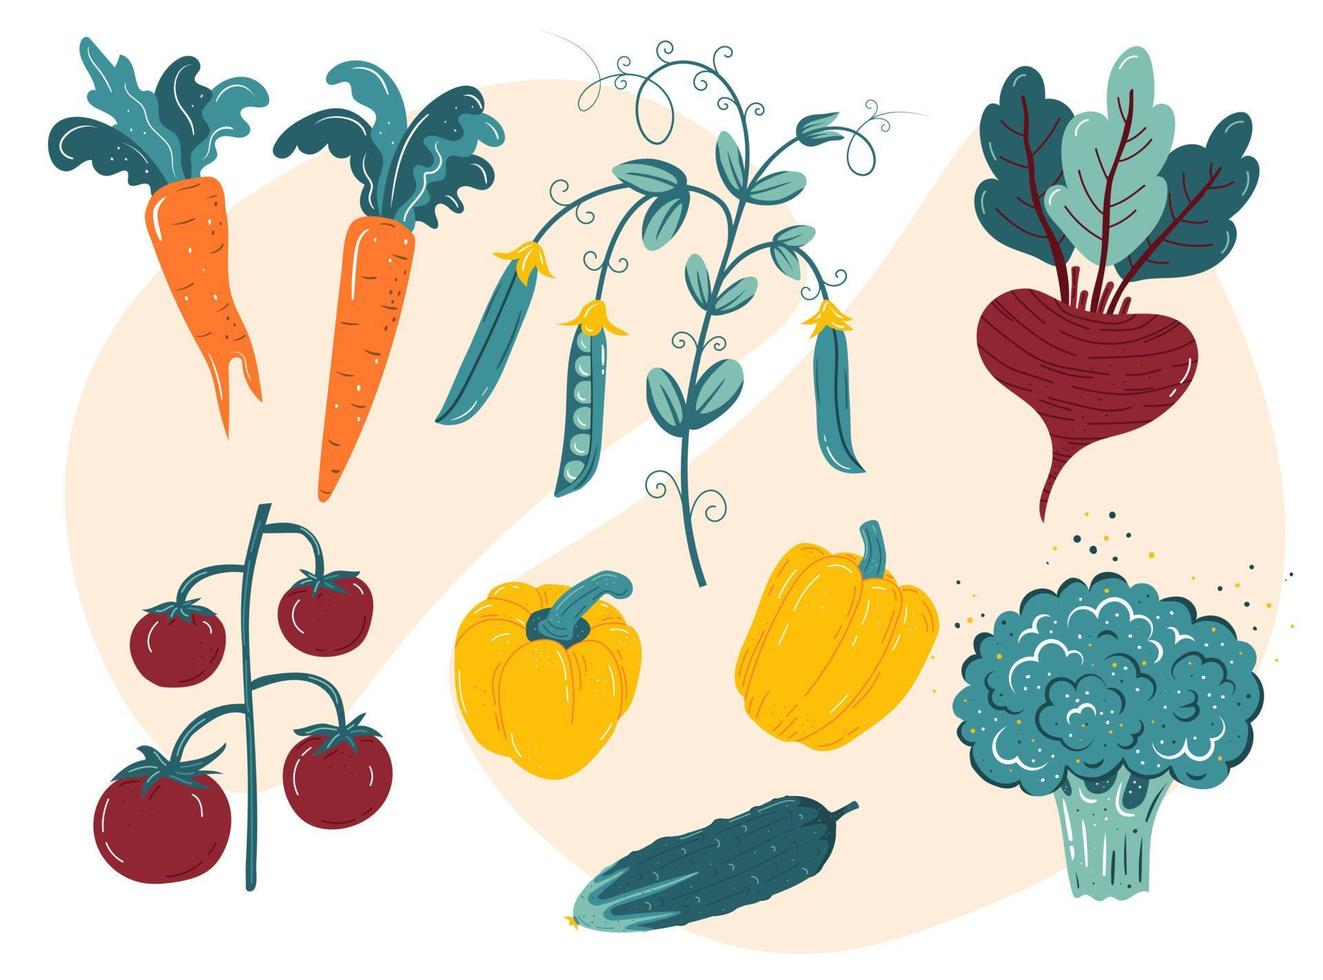 verduras orgánicas frescas: pimiento, guisantes, zanahoria, tomate, pepino, brócoli, remolacha. ilustración vectorial, comida vegetariana saludable vector